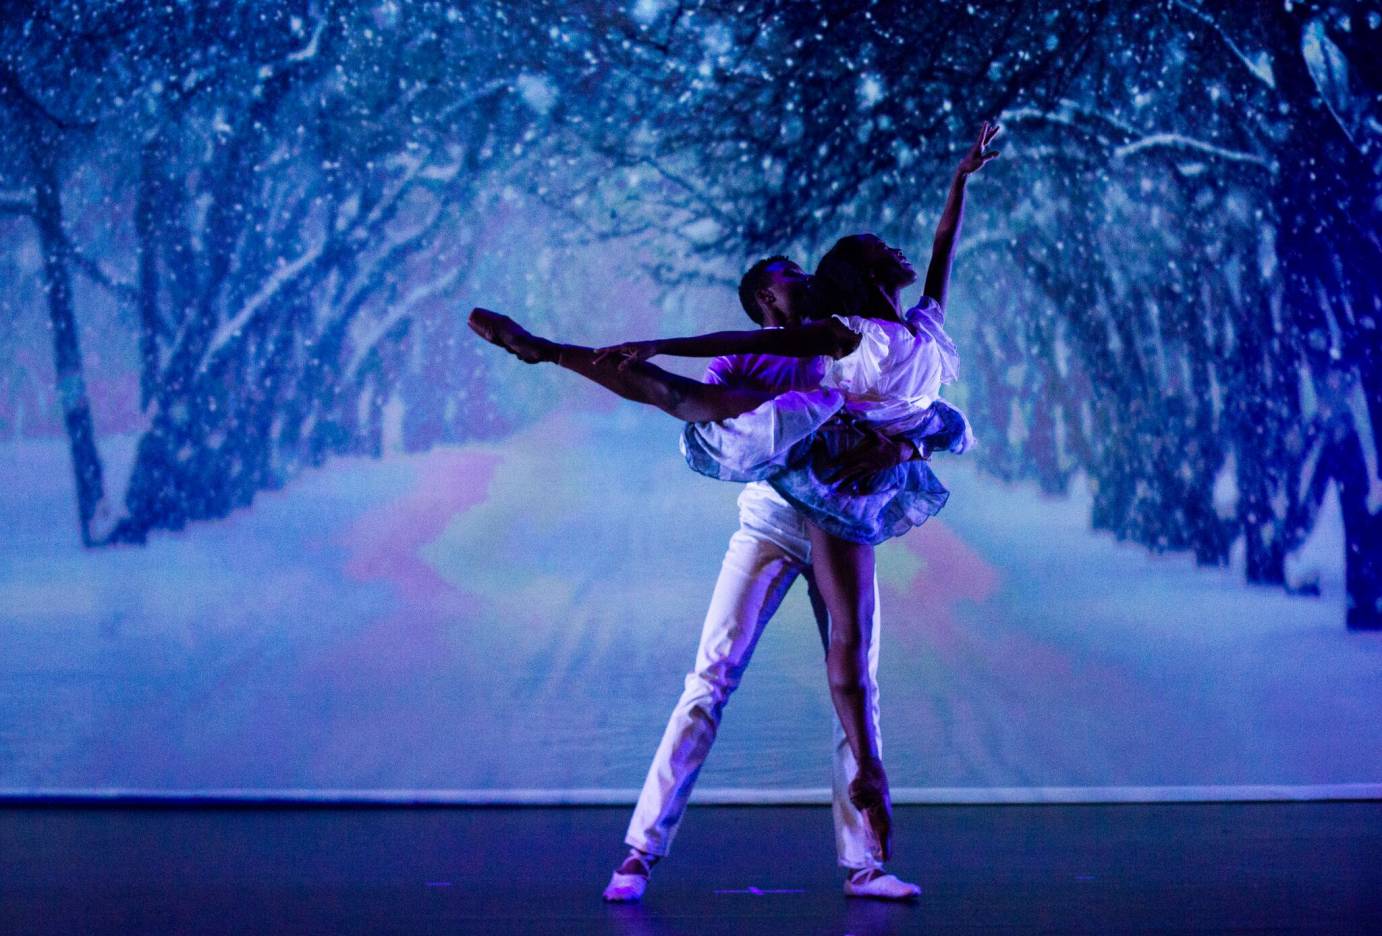 Elegant ballet couple against a snowy backdrop